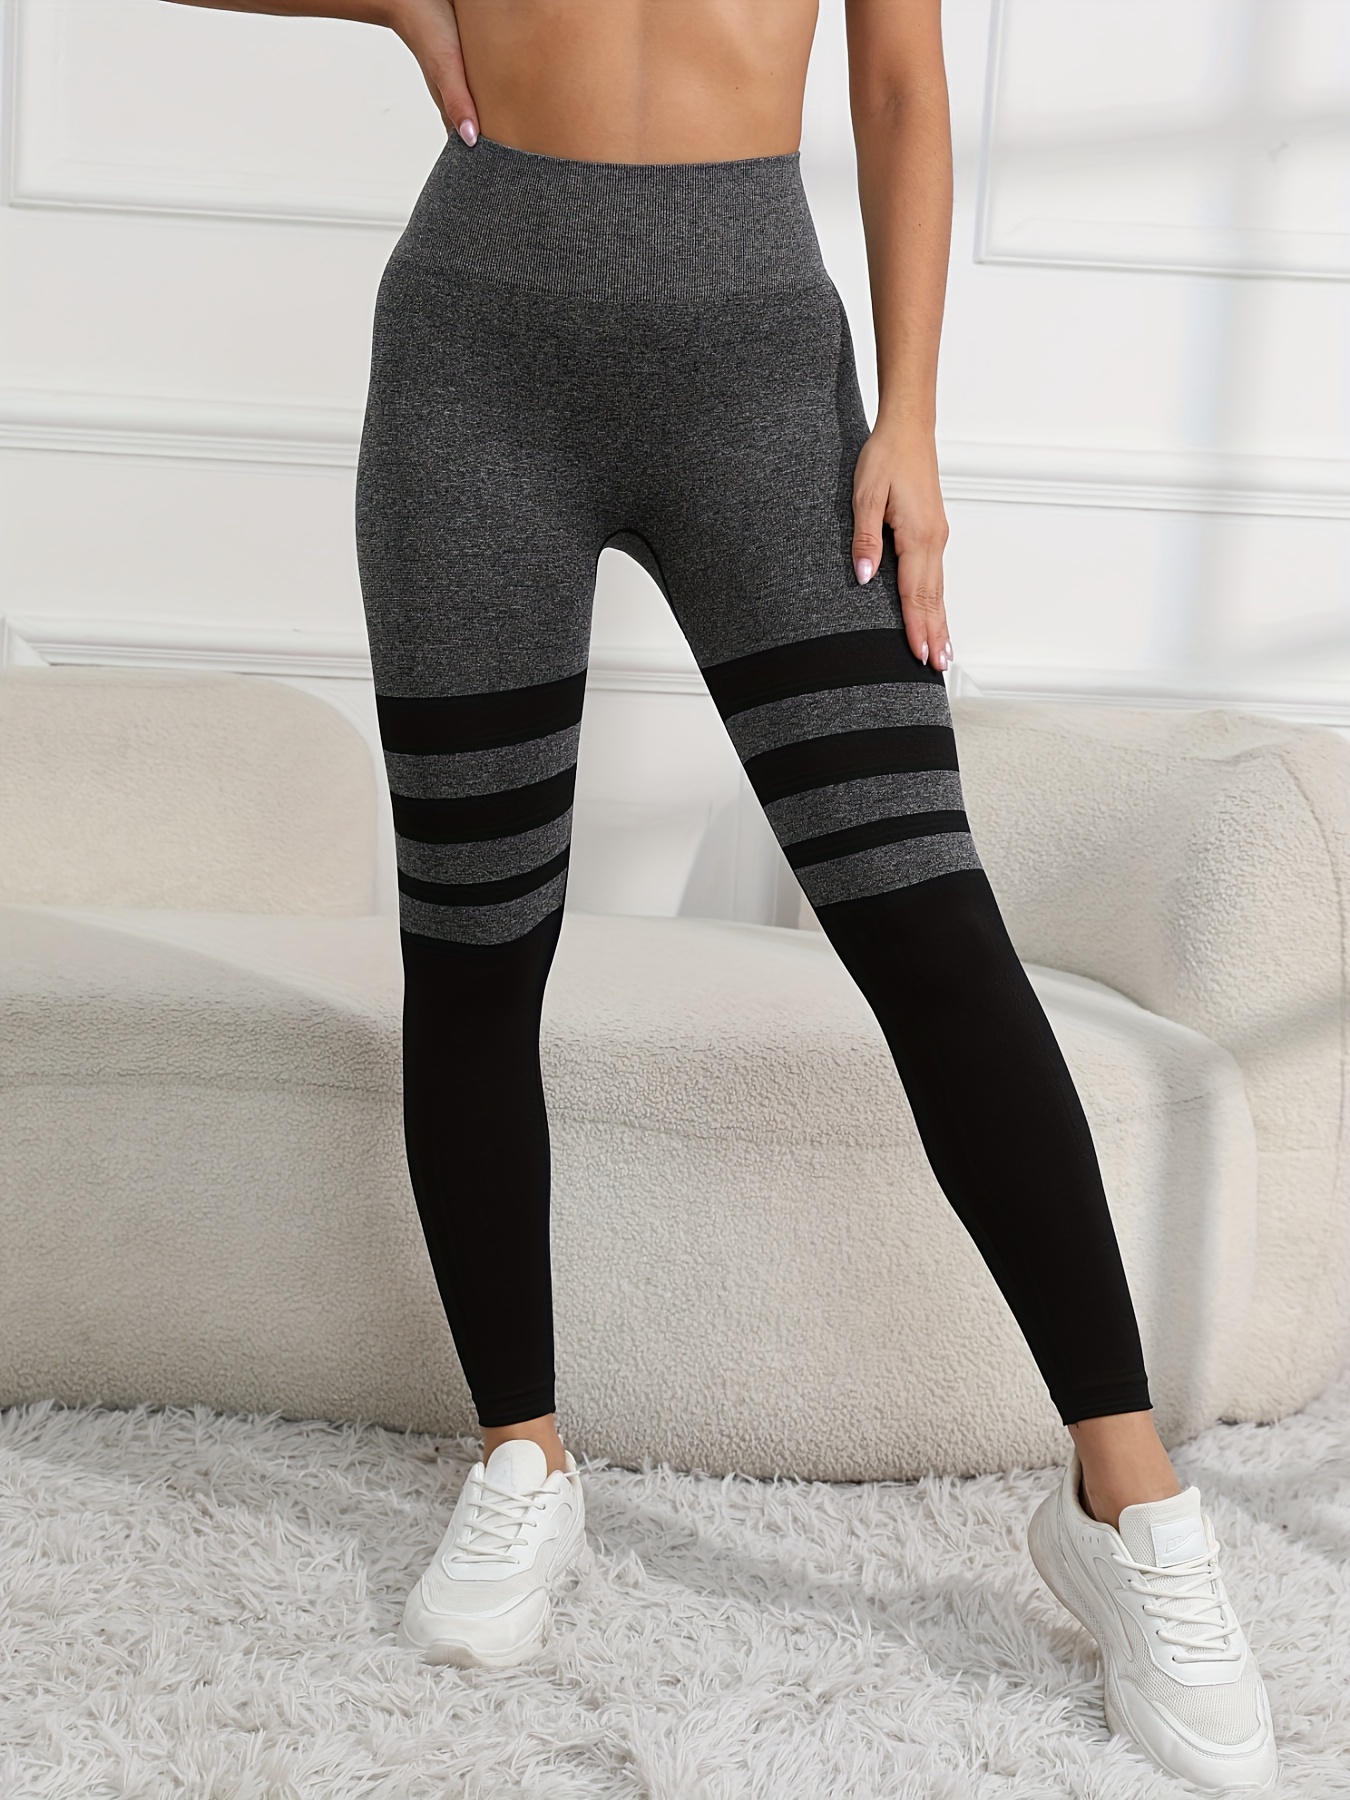 YHWW Leggings,Striped Splicing Woman Seamless Legging Yoga Pants Sports  High Waist Full Length Workout Leggings for Fittness